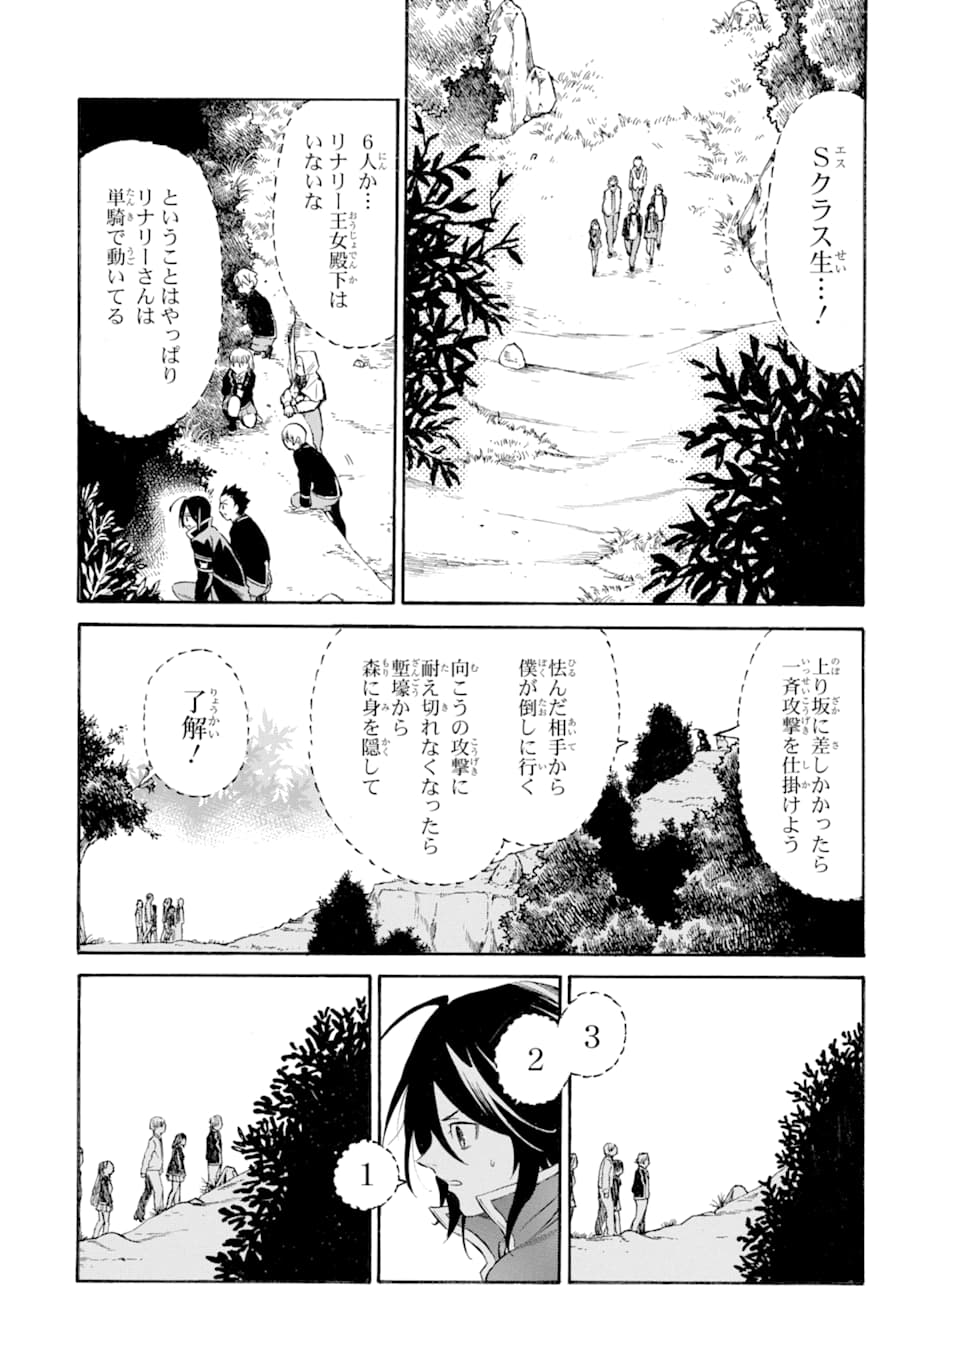 Manga Mogura RE on X: The World's Finest Assassin Gets Reincarnated in  Another World manga adaptation Vol.6 by Rui Tsukiyo, Hamao Sumeragi, Reia (Sekai  Saikou no Ansatsusha, Isekai Kizoku ni Tensei suru)